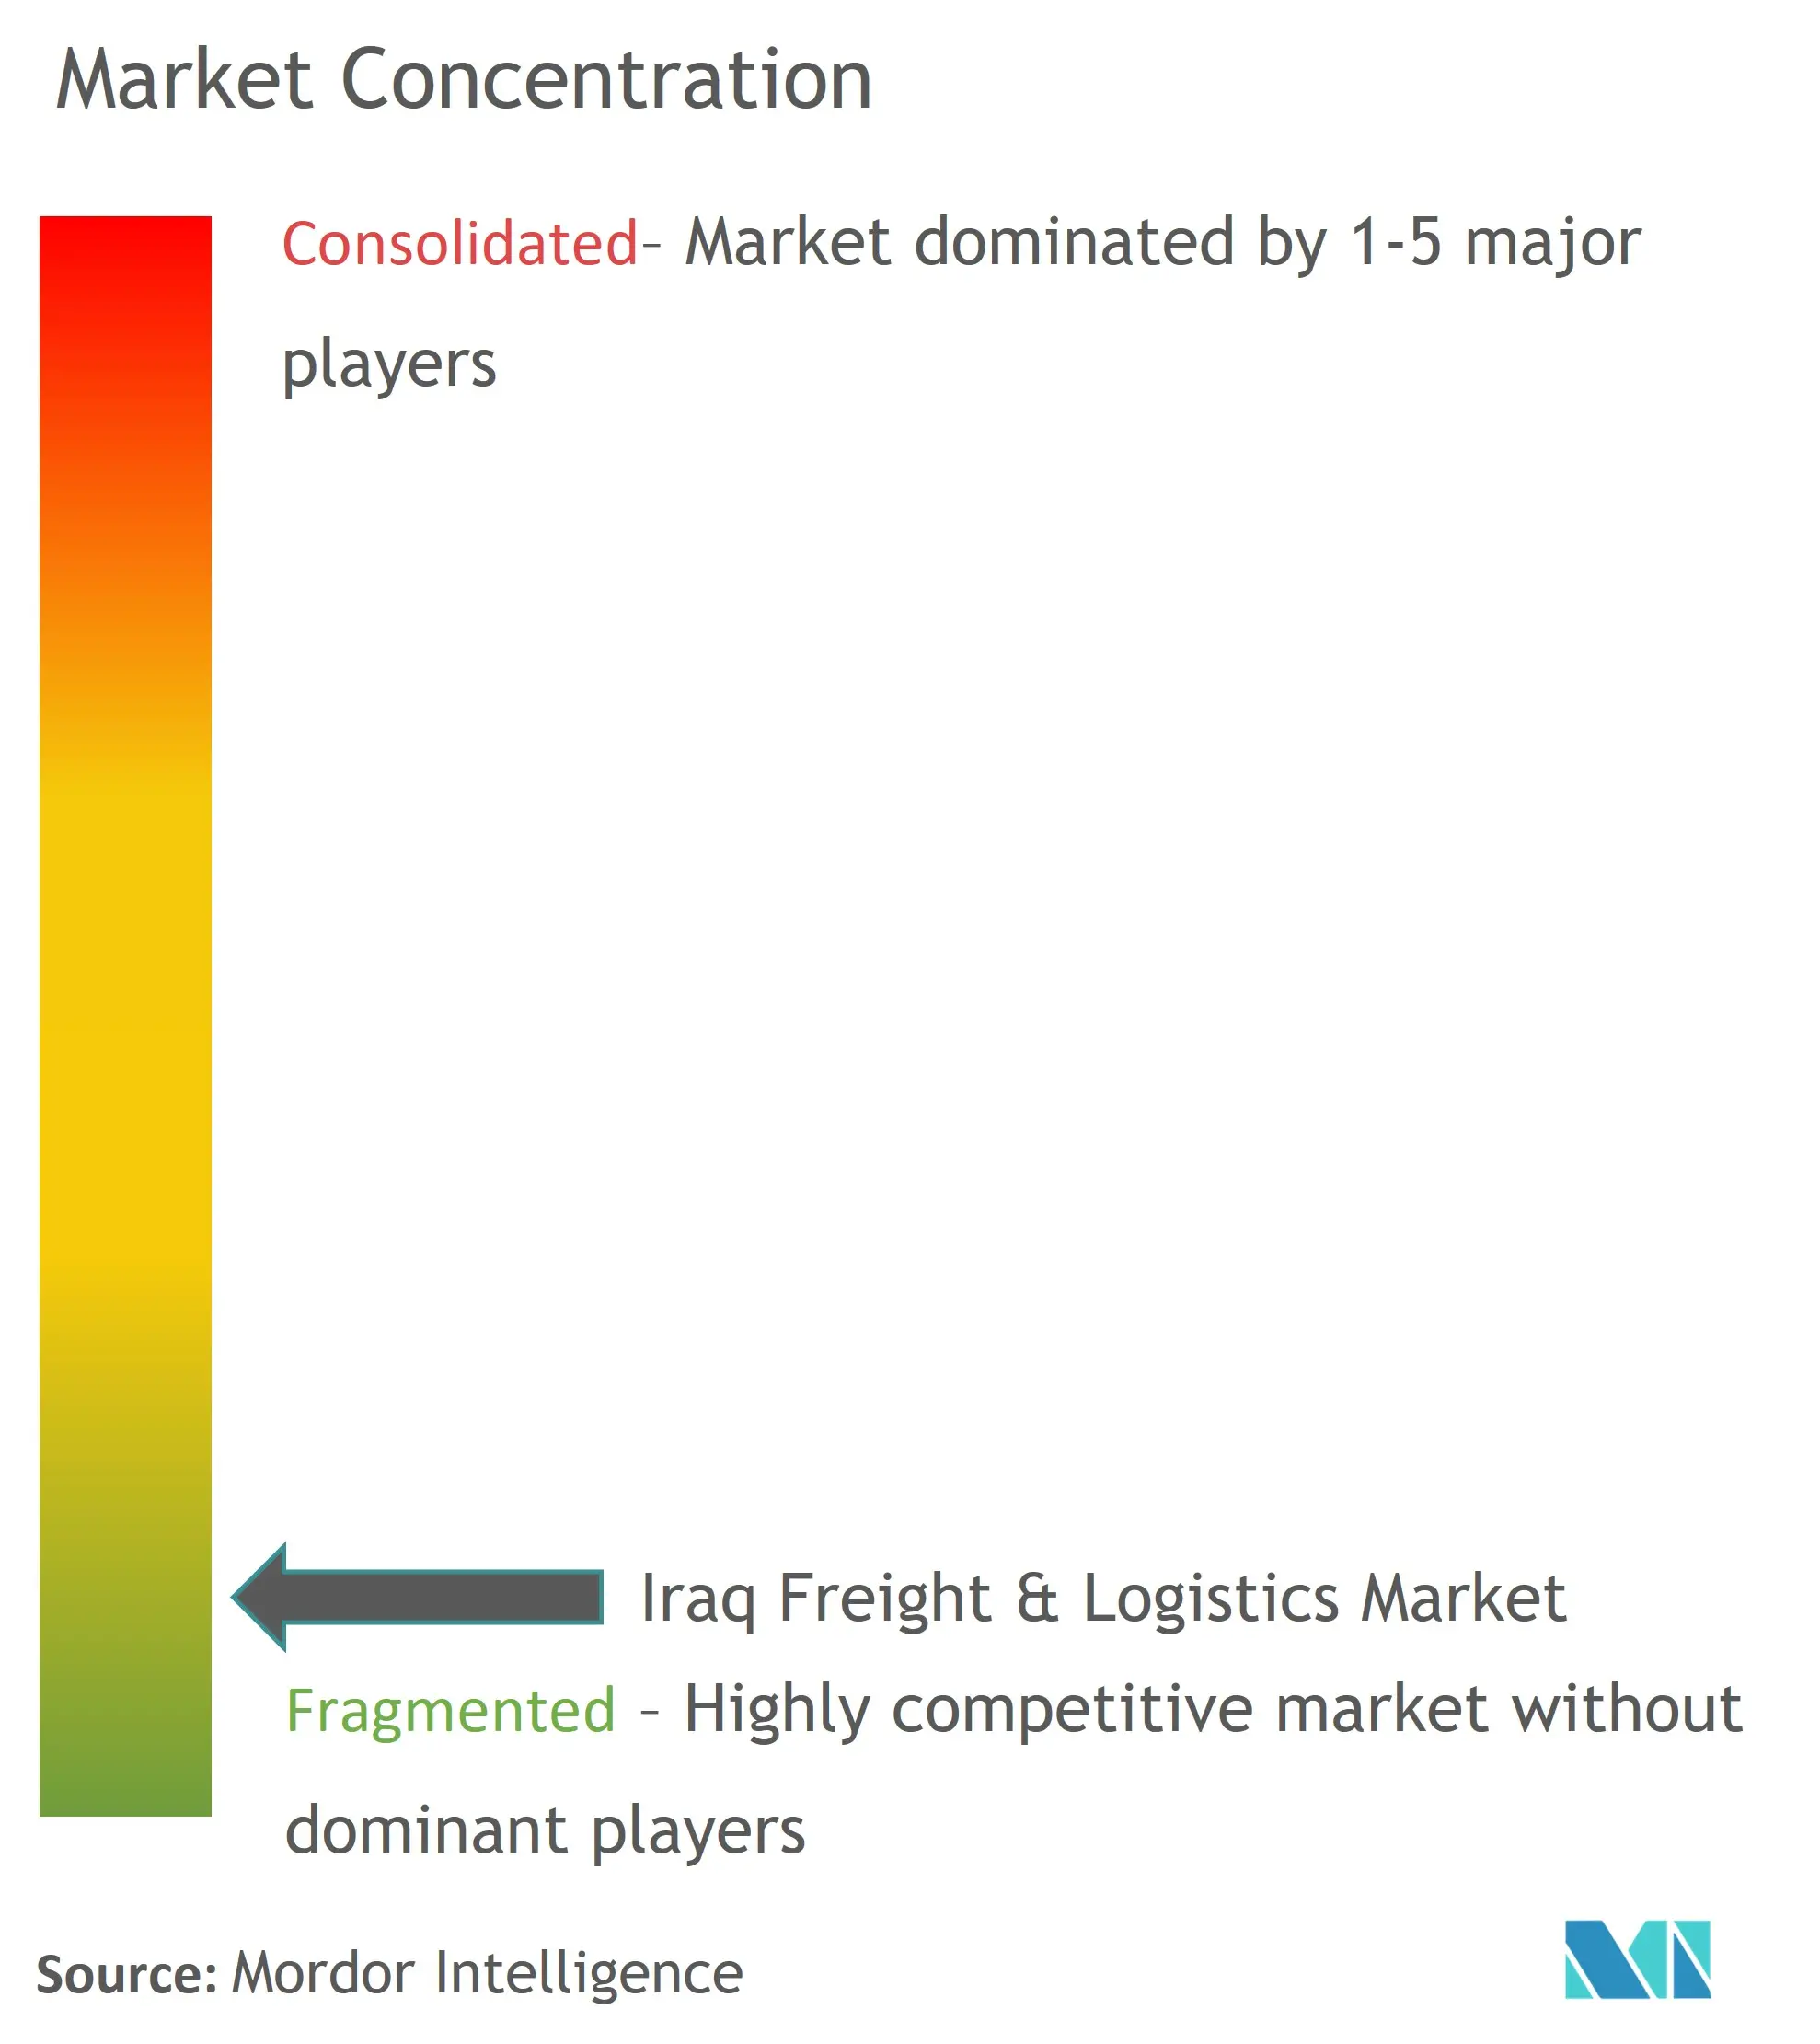 Iraq Freight & Logistics Market Concentration